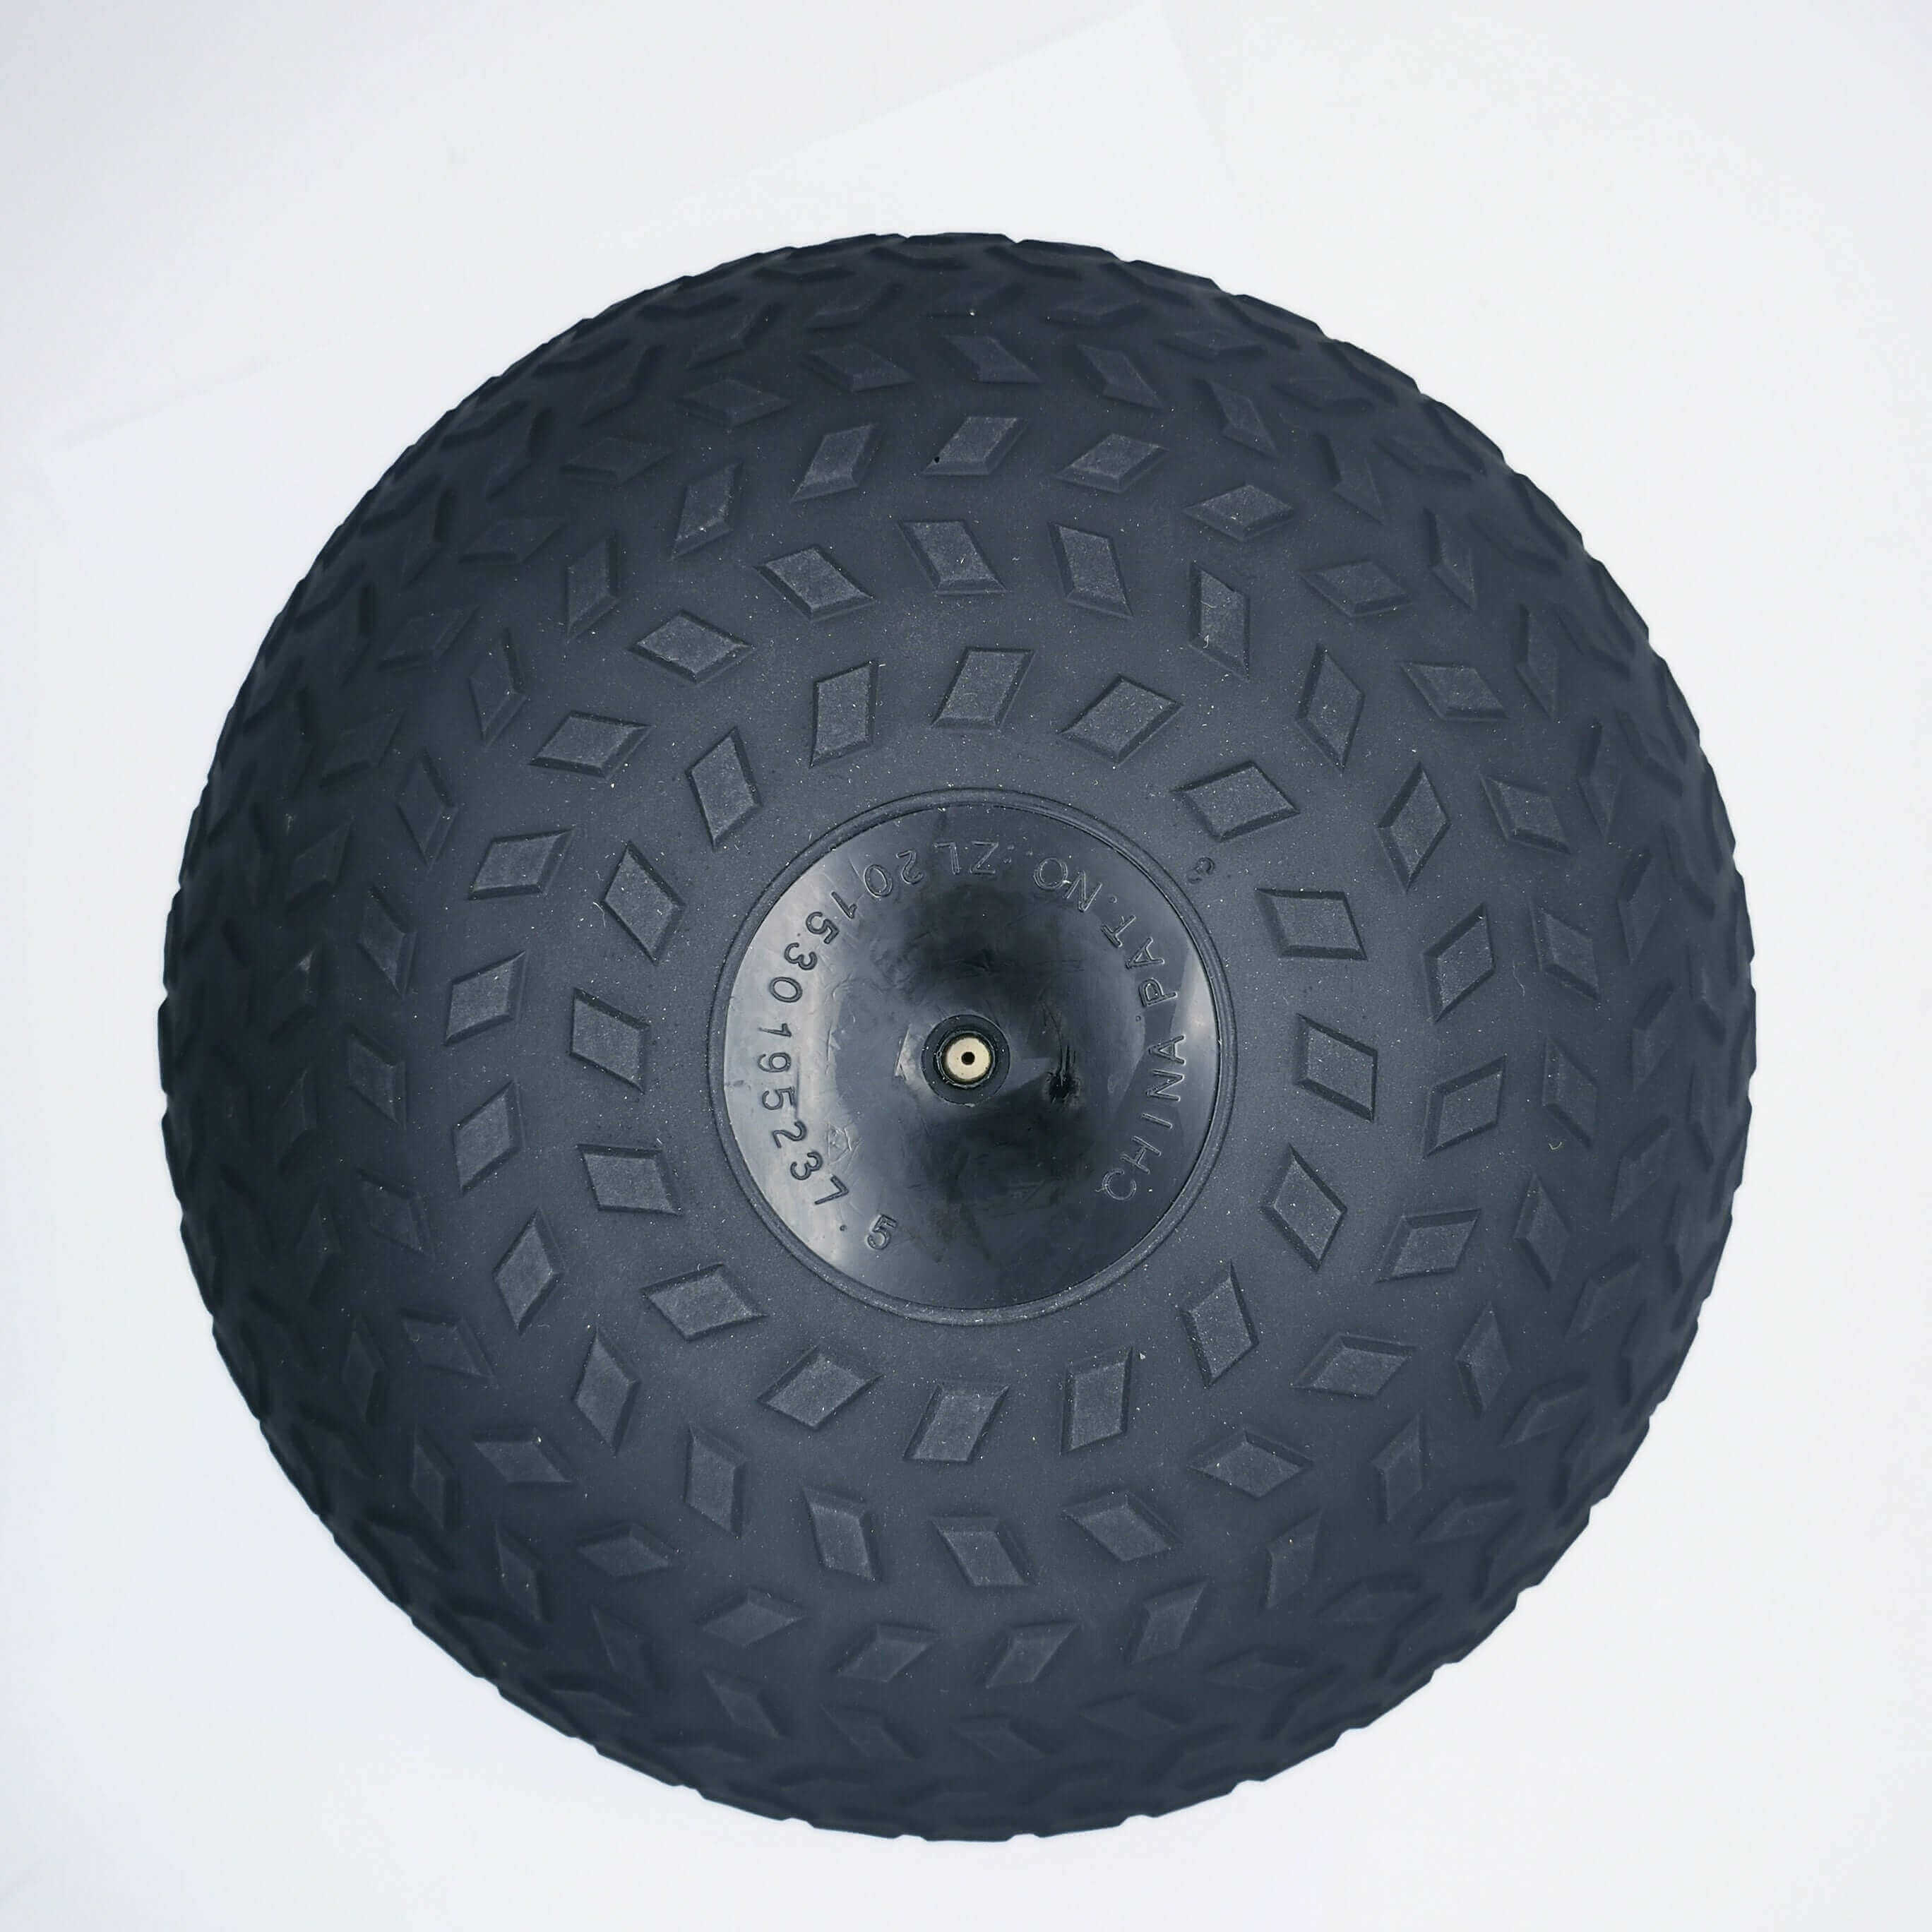 9kg Tyre Thread Slam Balls Fitness Exercise Sand Bag | INSOURCE